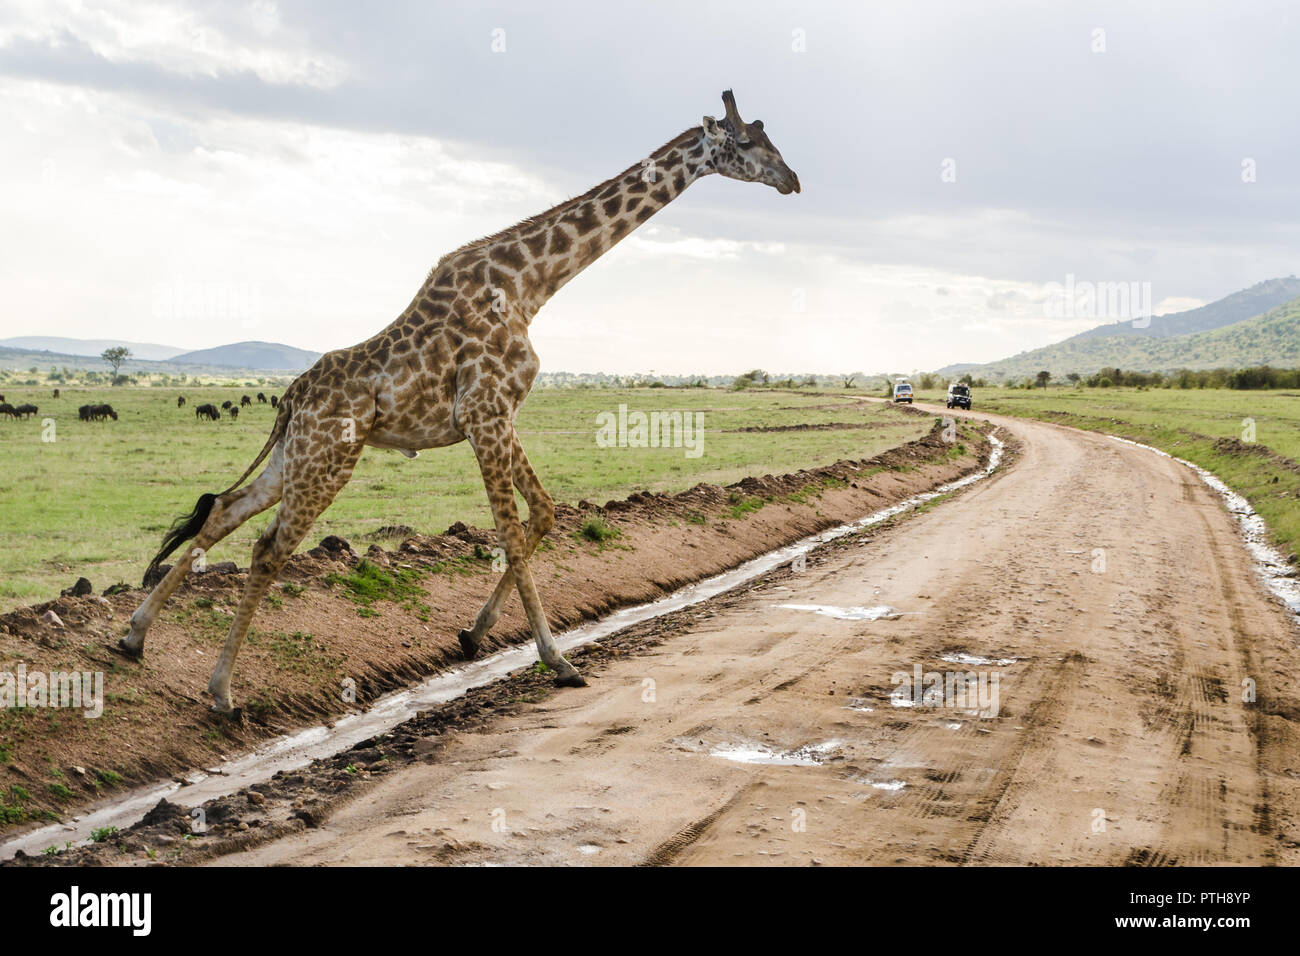 Masai giraffe attraversare una strada sterrata in Masai Mara riserva nazionale, Kenya Foto Stock